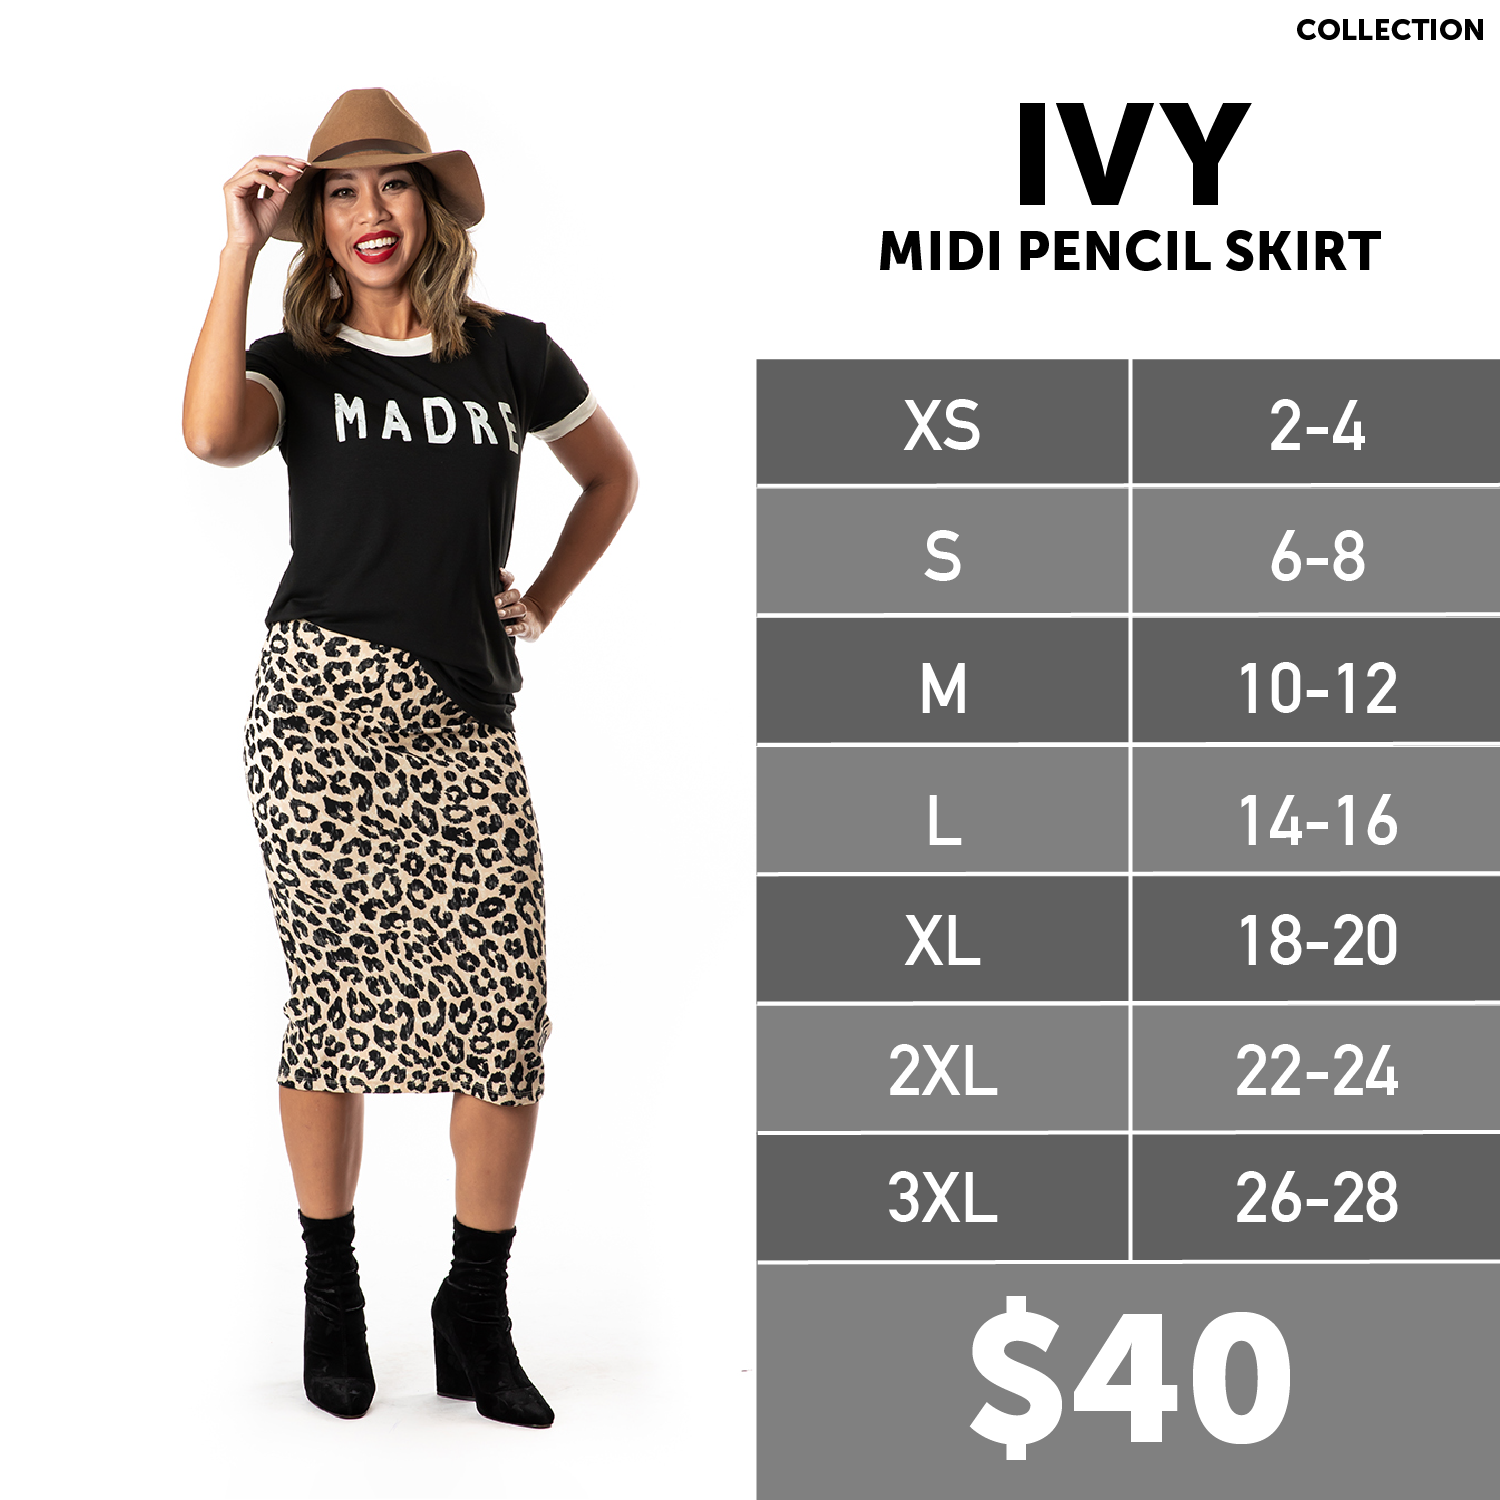 Lularoe Ivy Pencil Skirt Size Chart